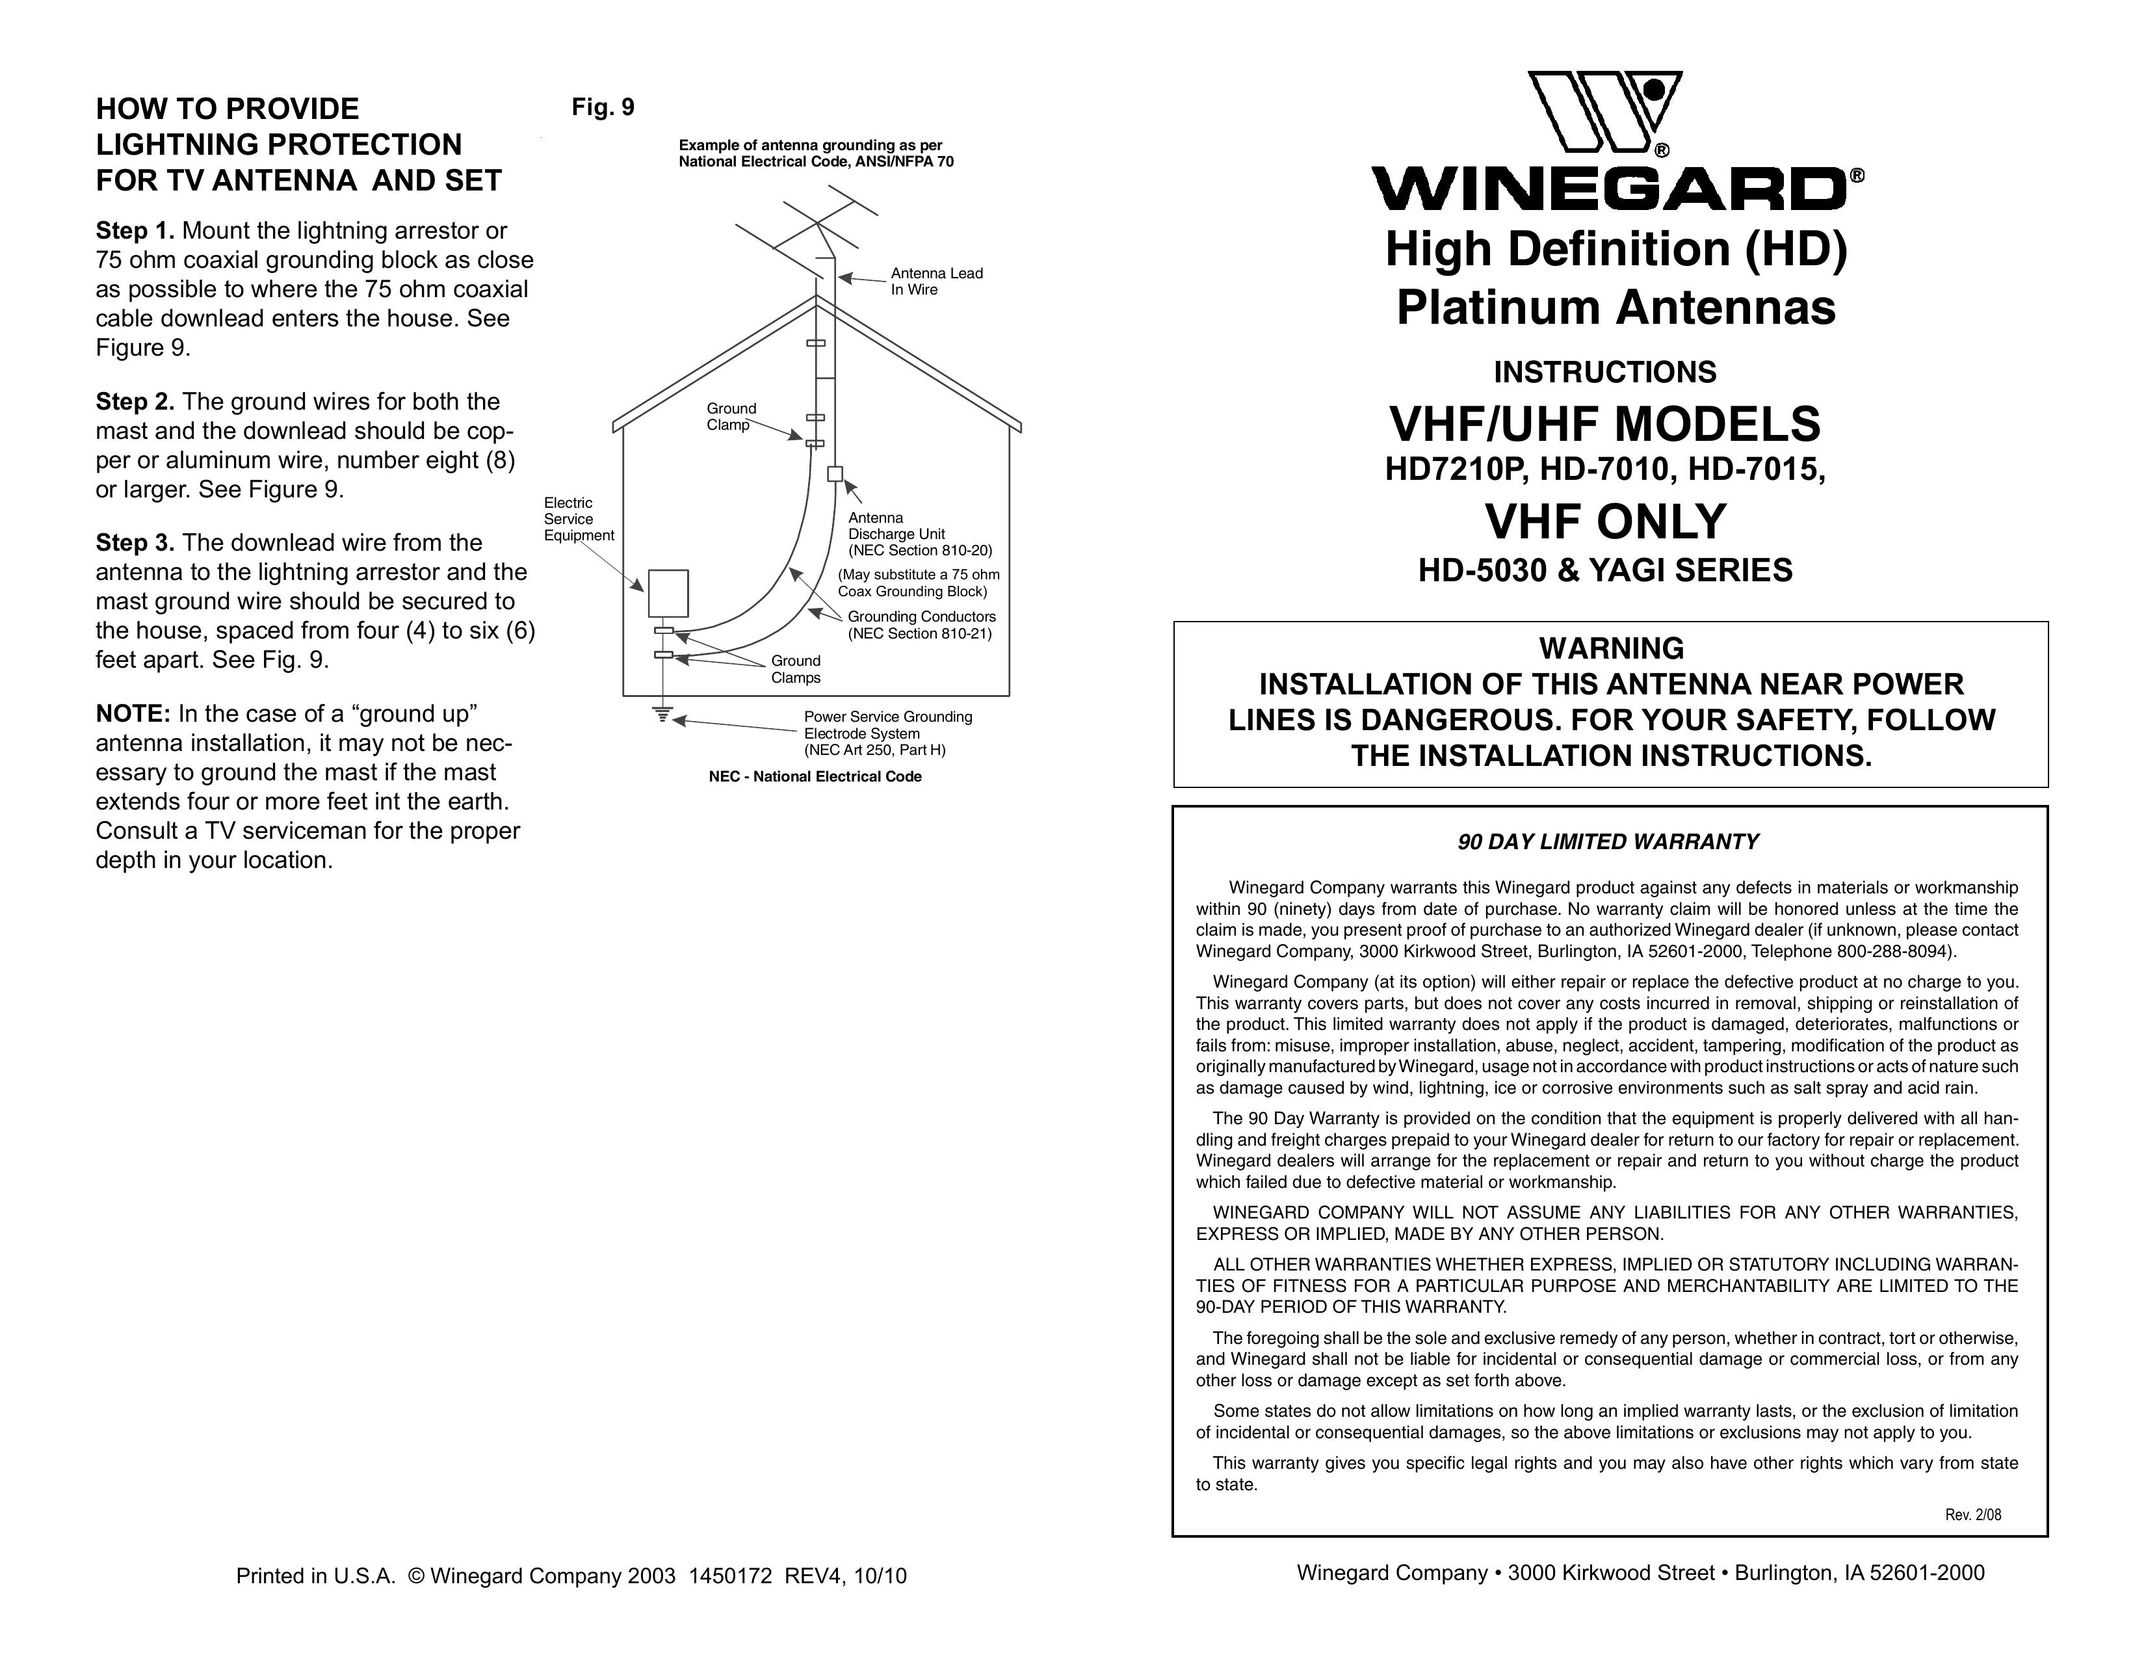 Winegard HD-5030 TV Antenna User Manual